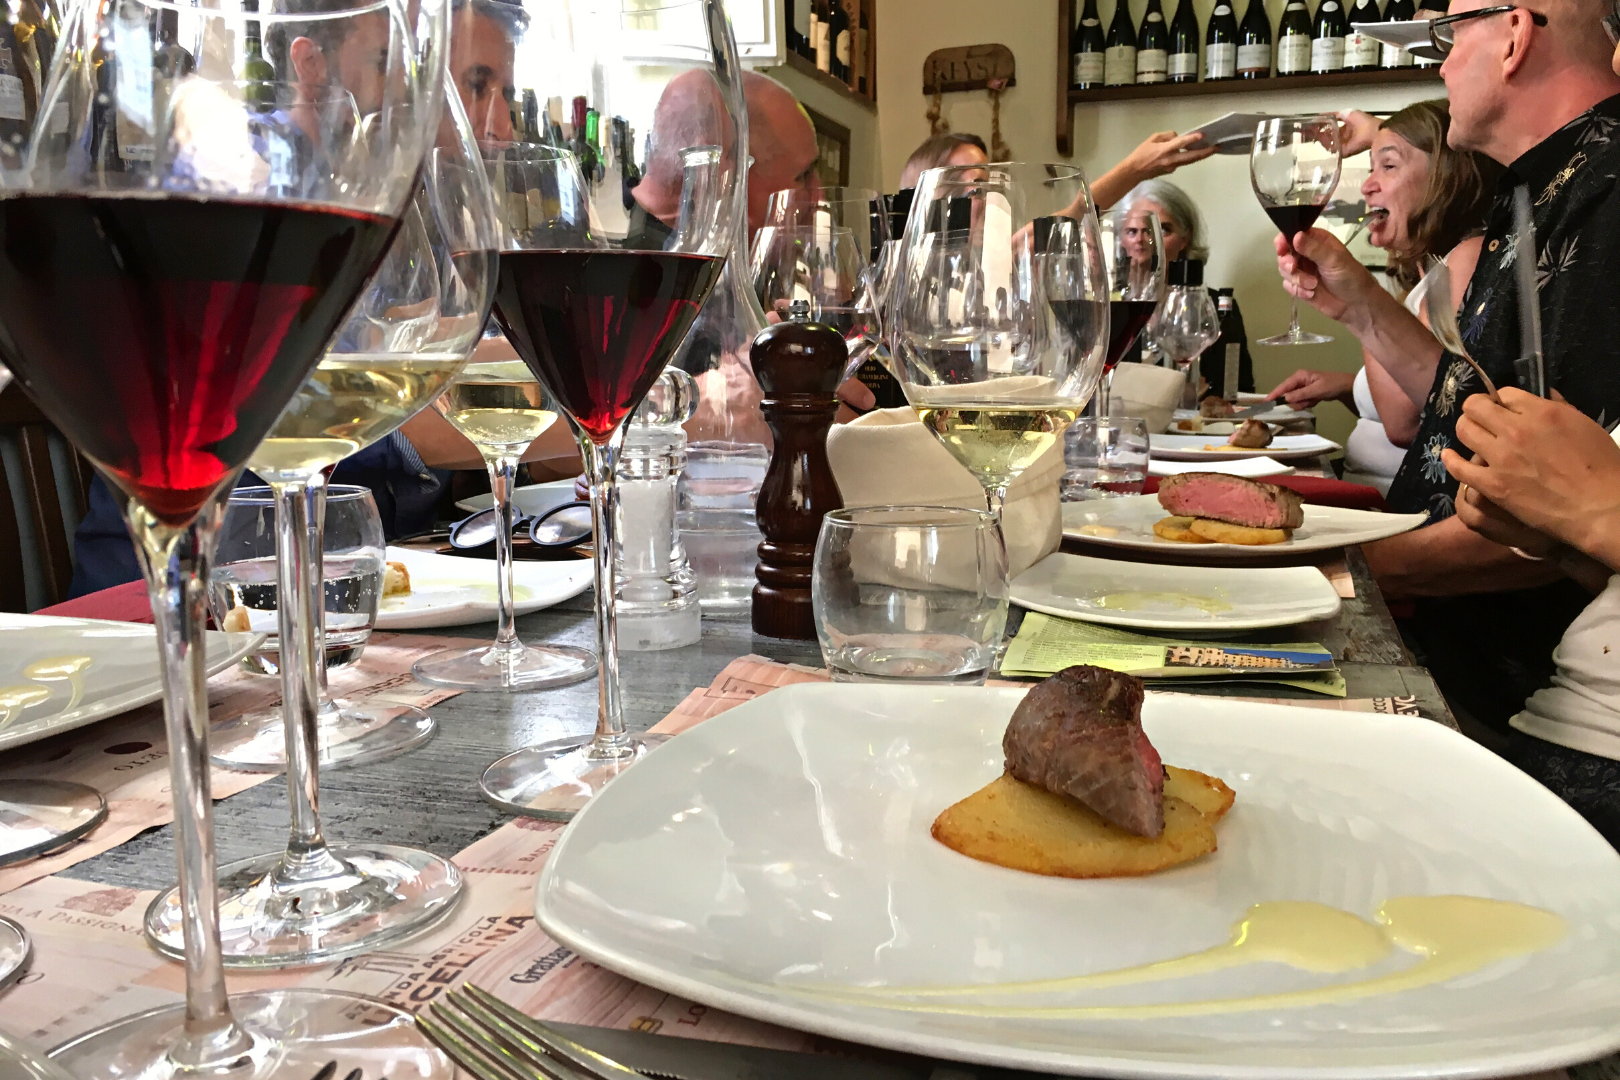 2Italia Food & Wine. Wine tasting lunch in Lucca